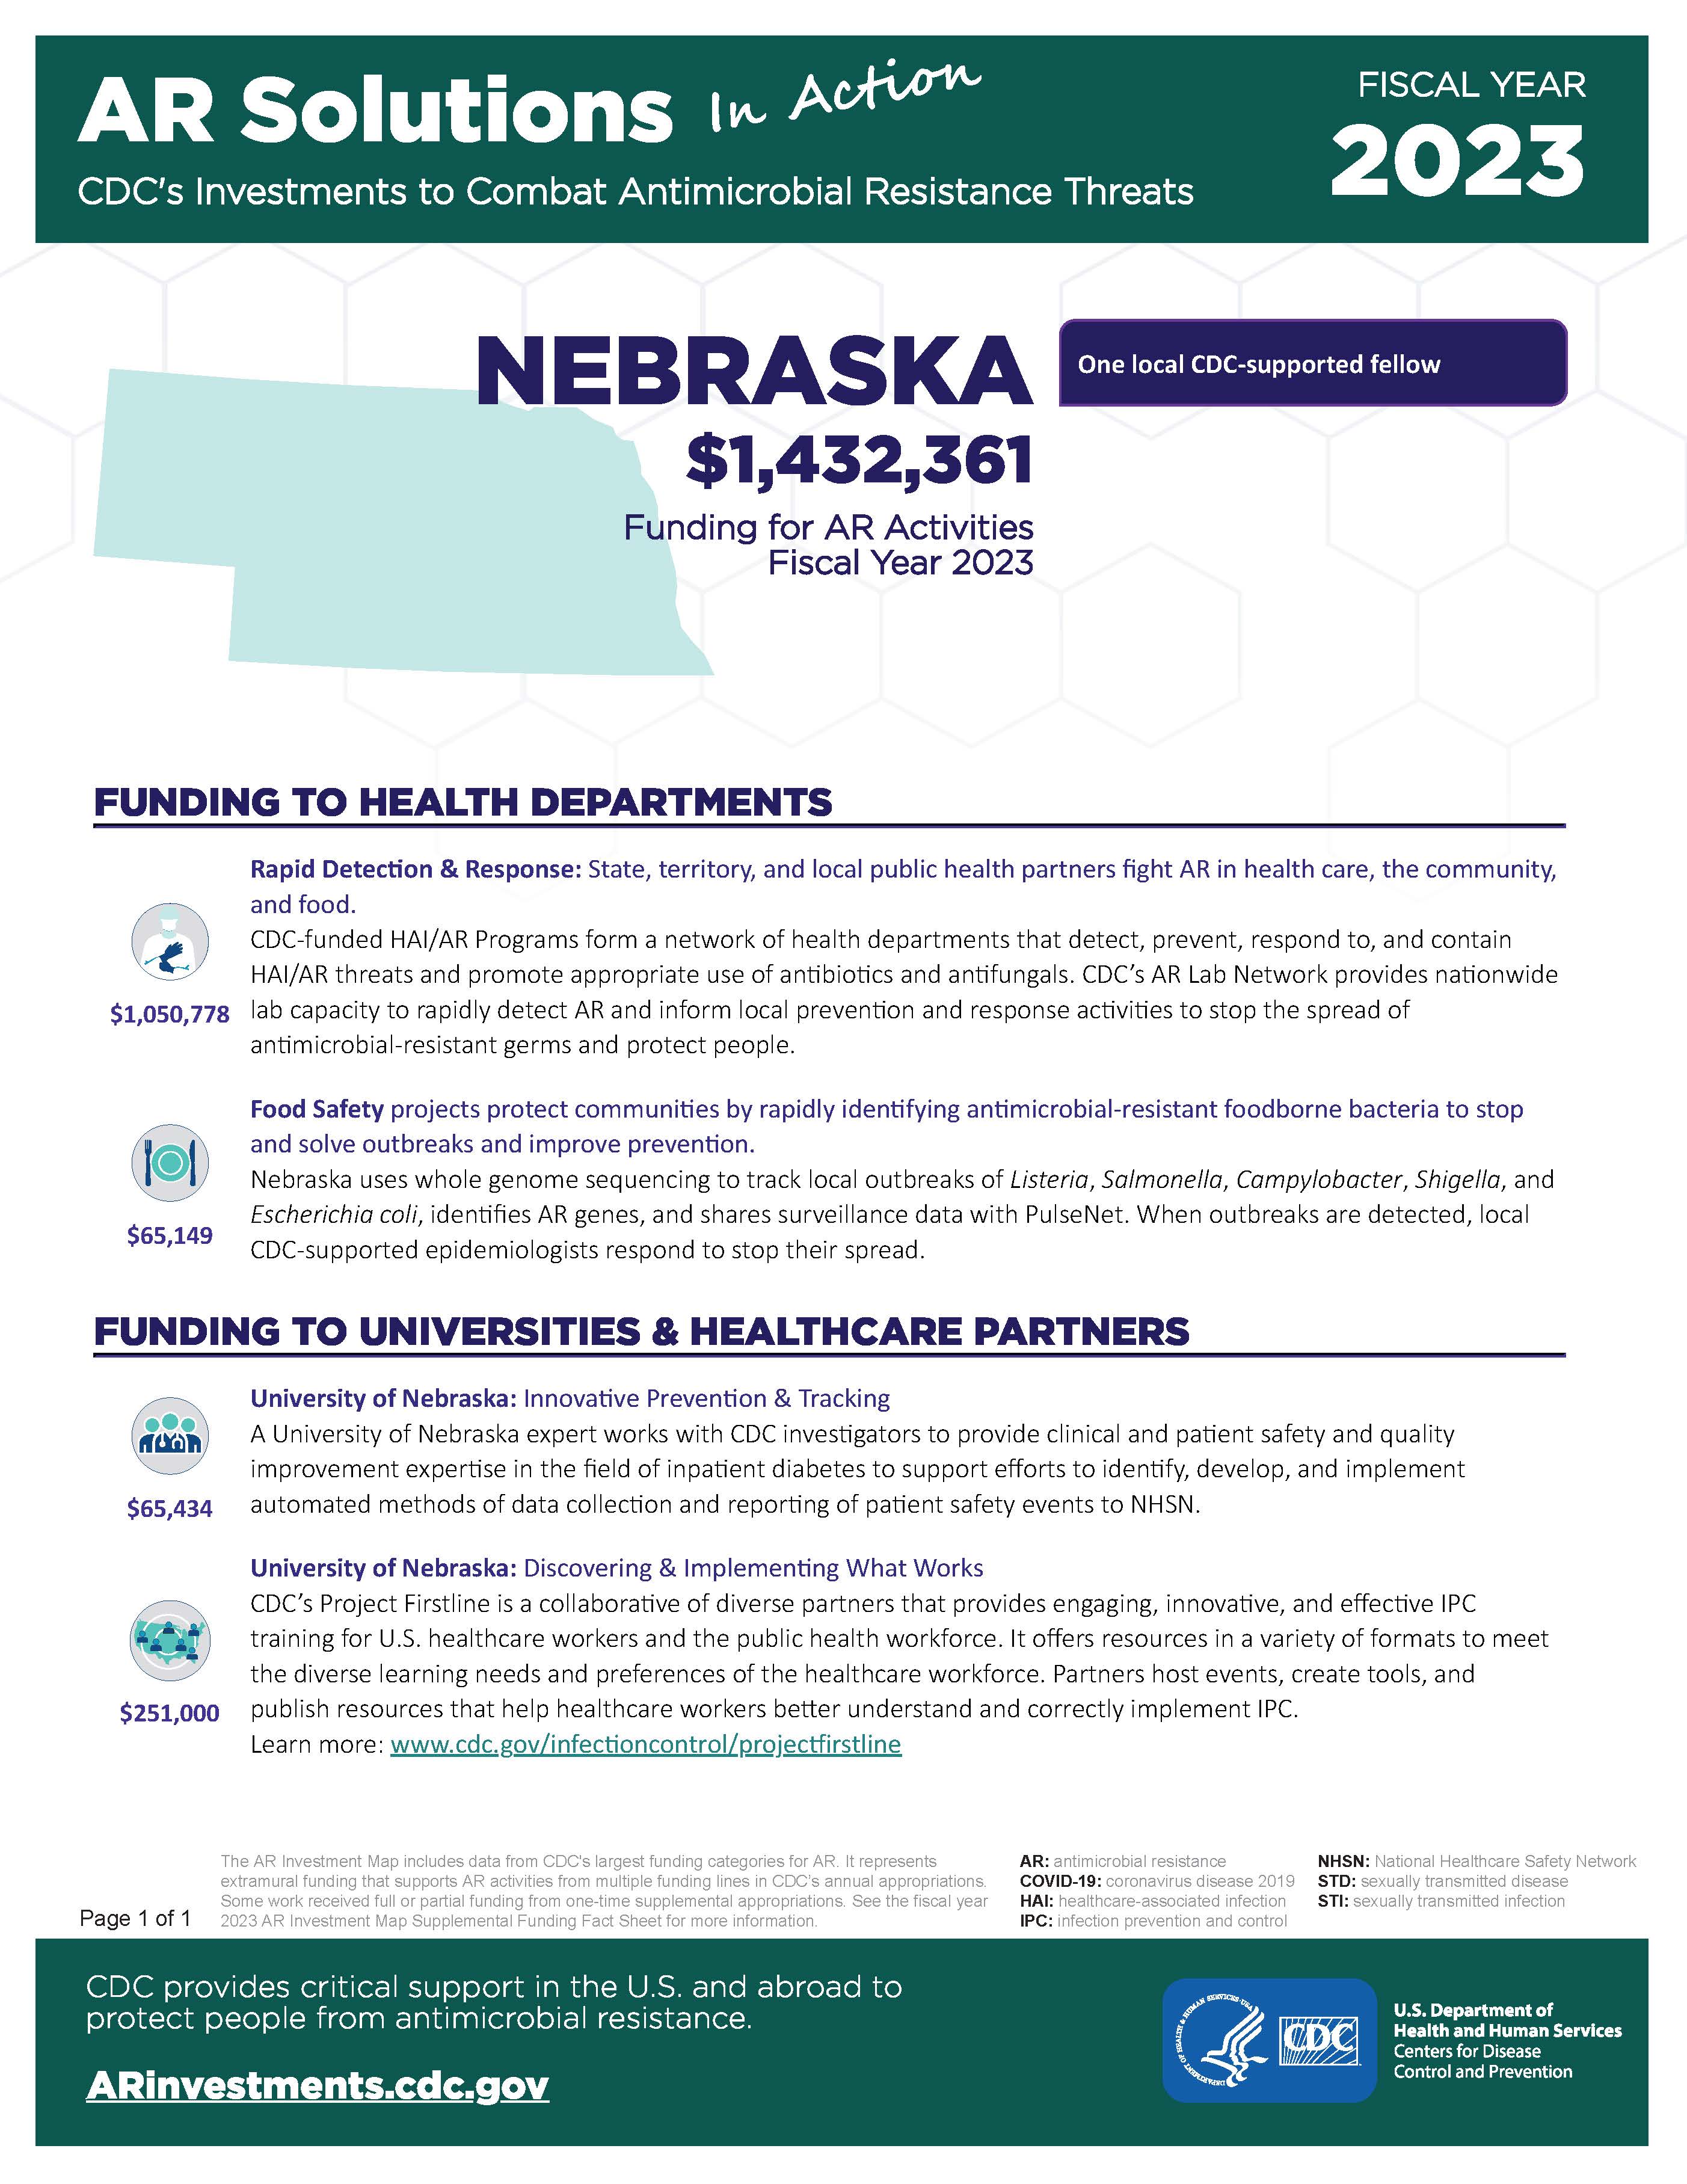 View Factsheet for Nebraska